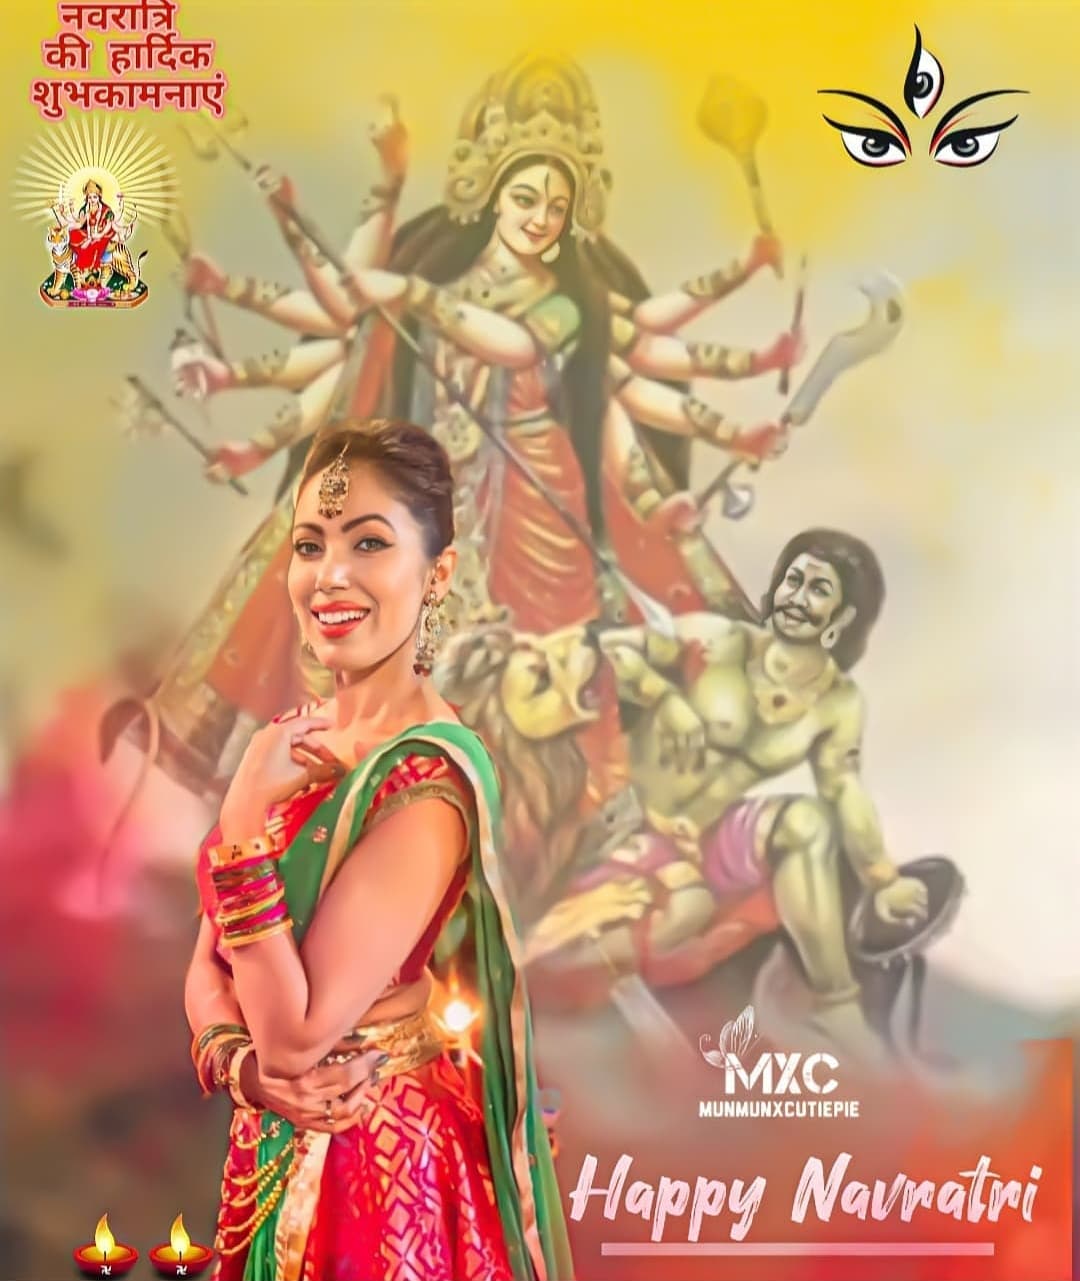 Woman Lehenga Choli Performing Dandiya Dance Stock Photo 113757148 |  Shutterstock